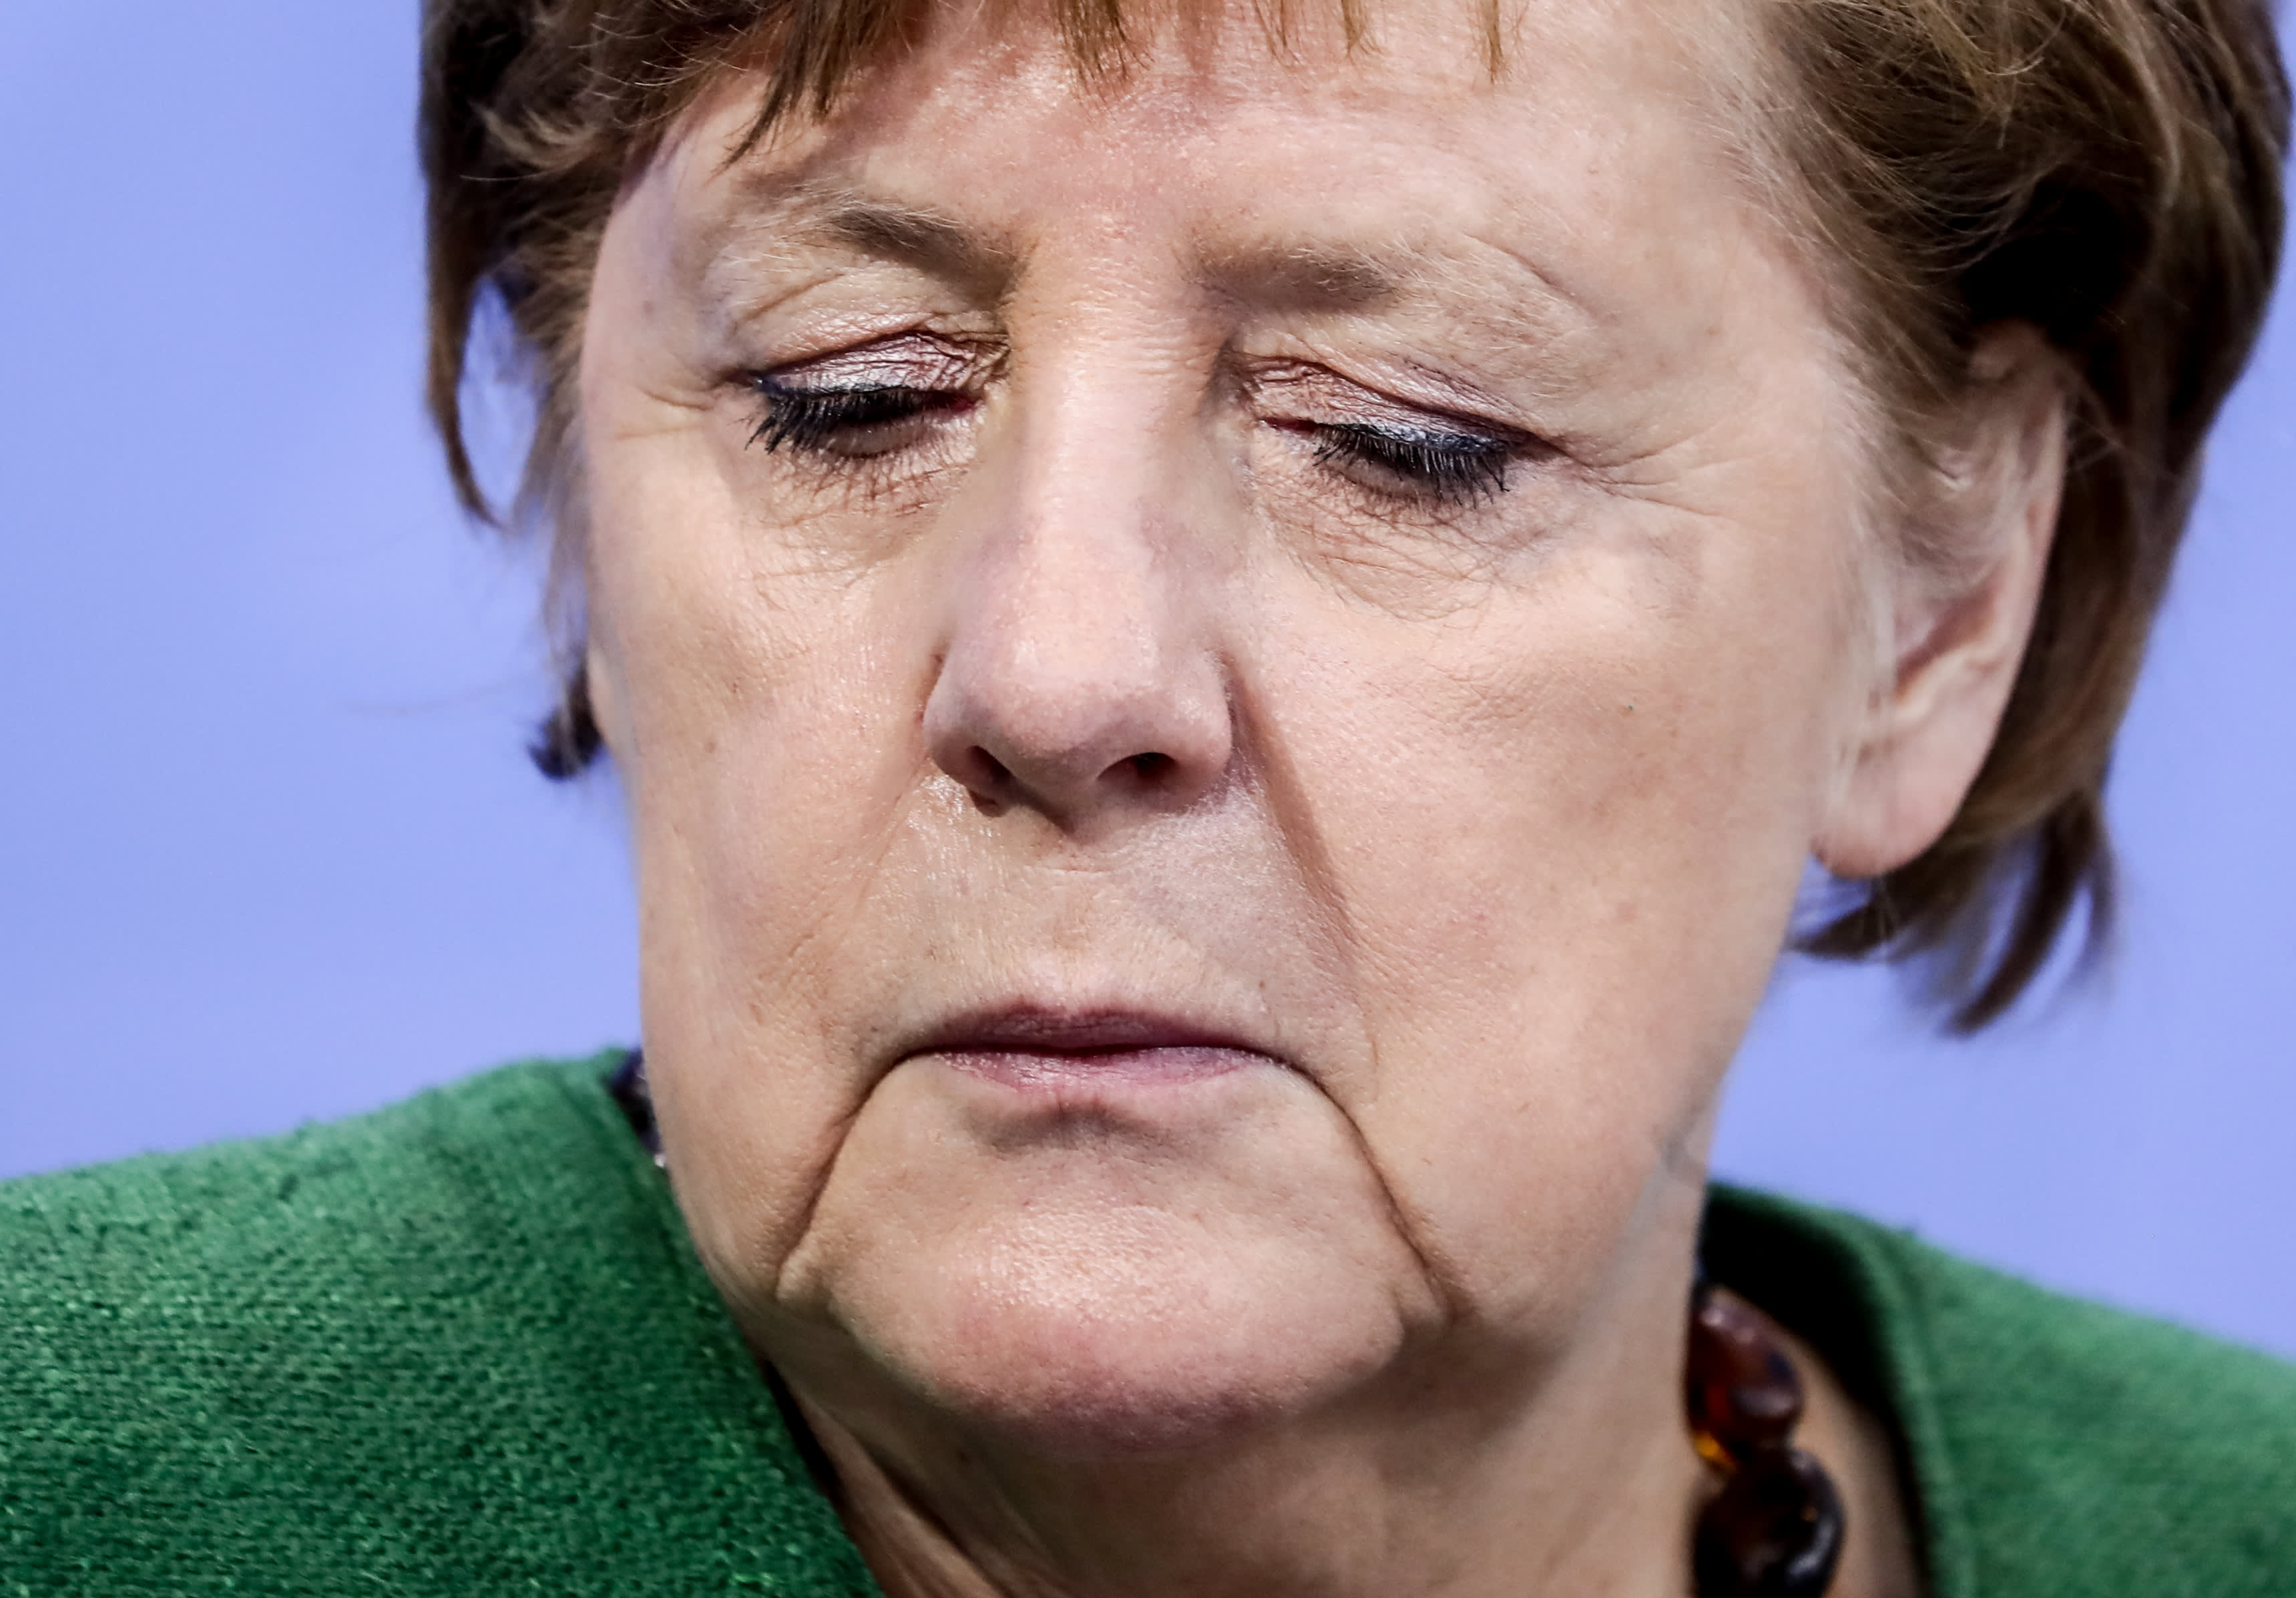 Confidence in Merkel's leadership falters as Germany's pandemic drags